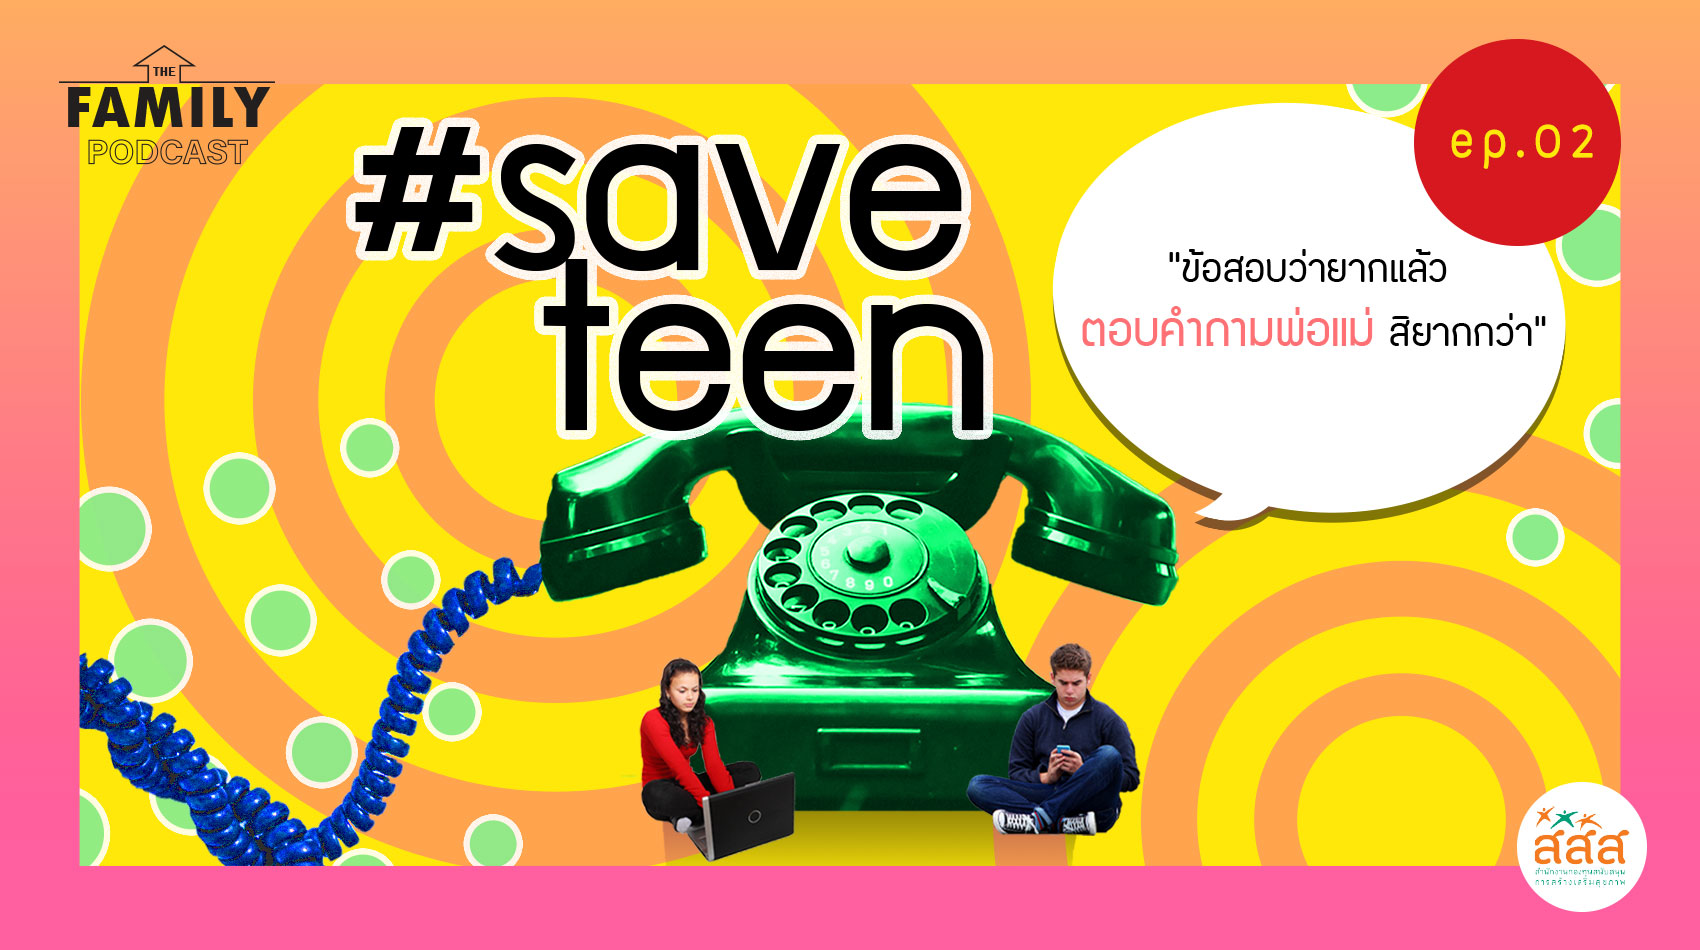 The Family Podcast Save teen EP.02 ข้อสอบว่ายากแล้ว ตอบคำถามพ่อแม่สิยากกว่า